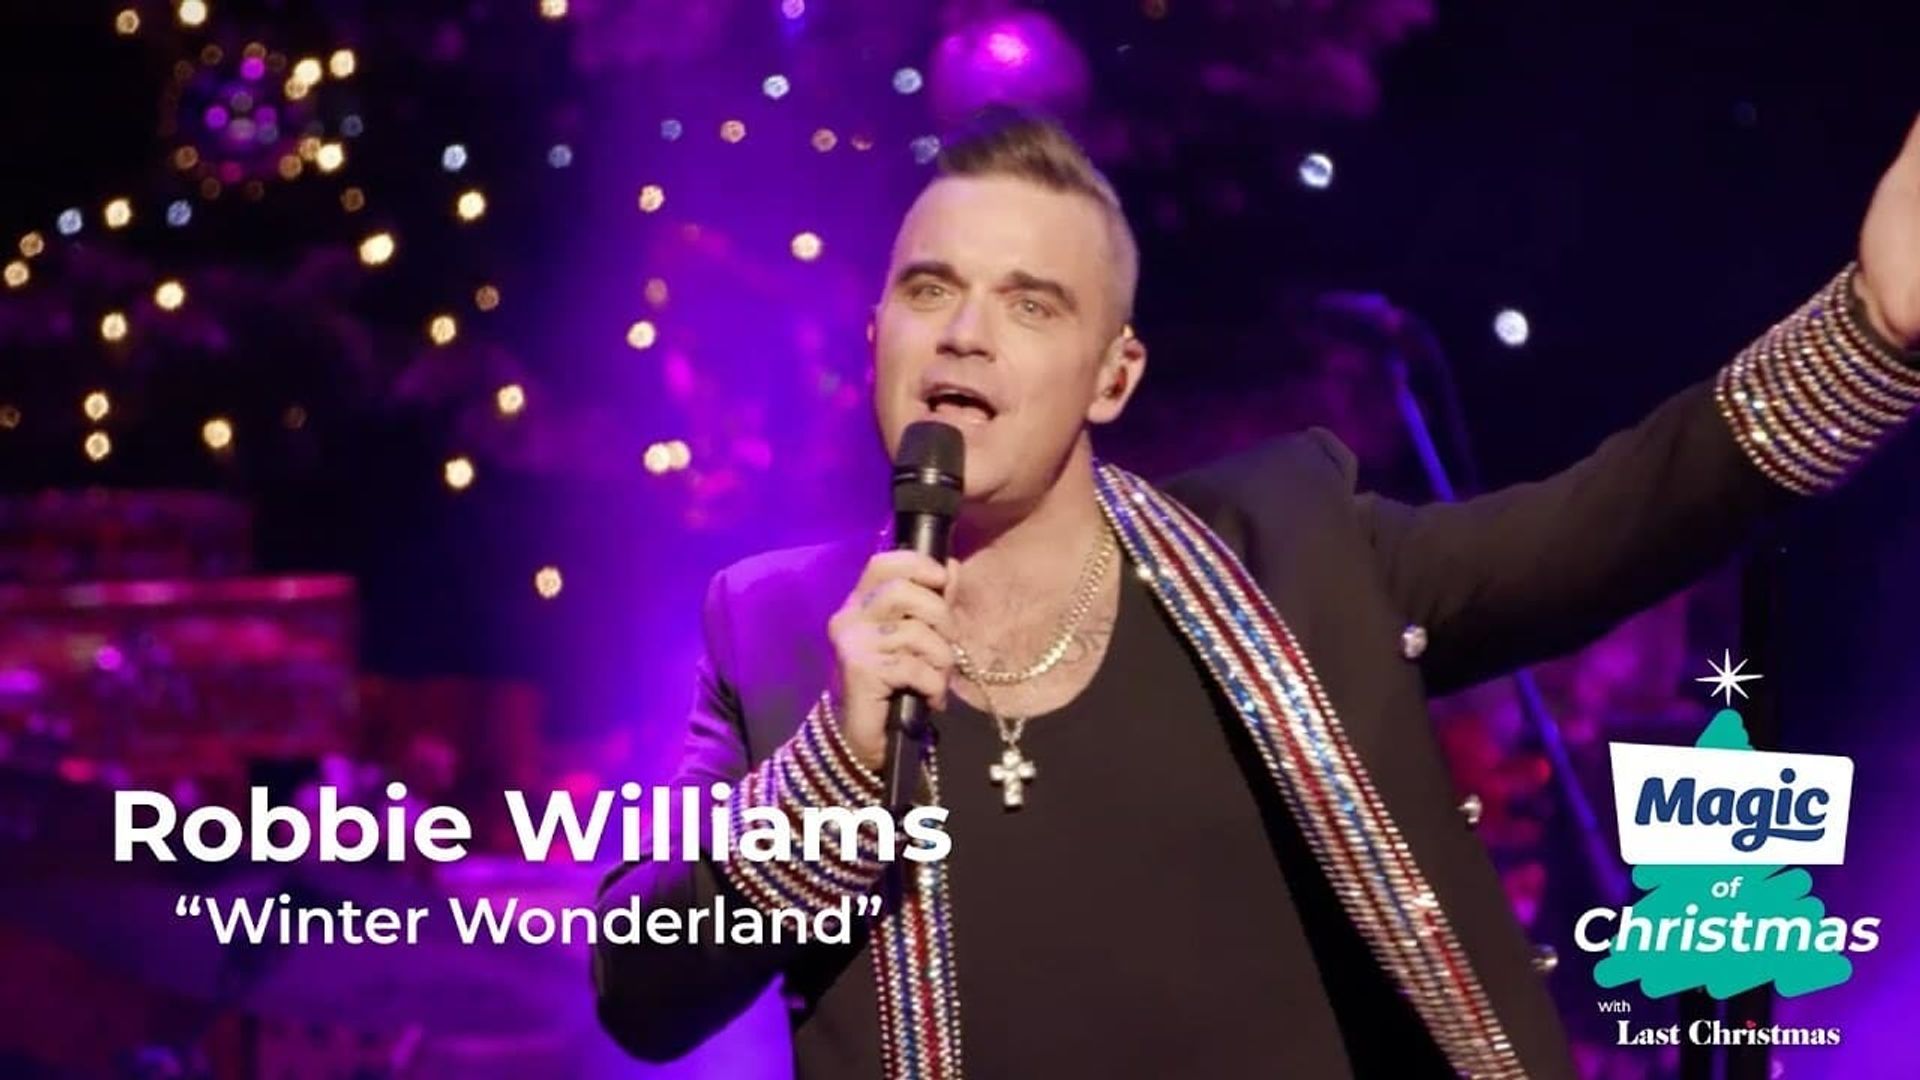 Robbie Williams One Night at the Palladium background